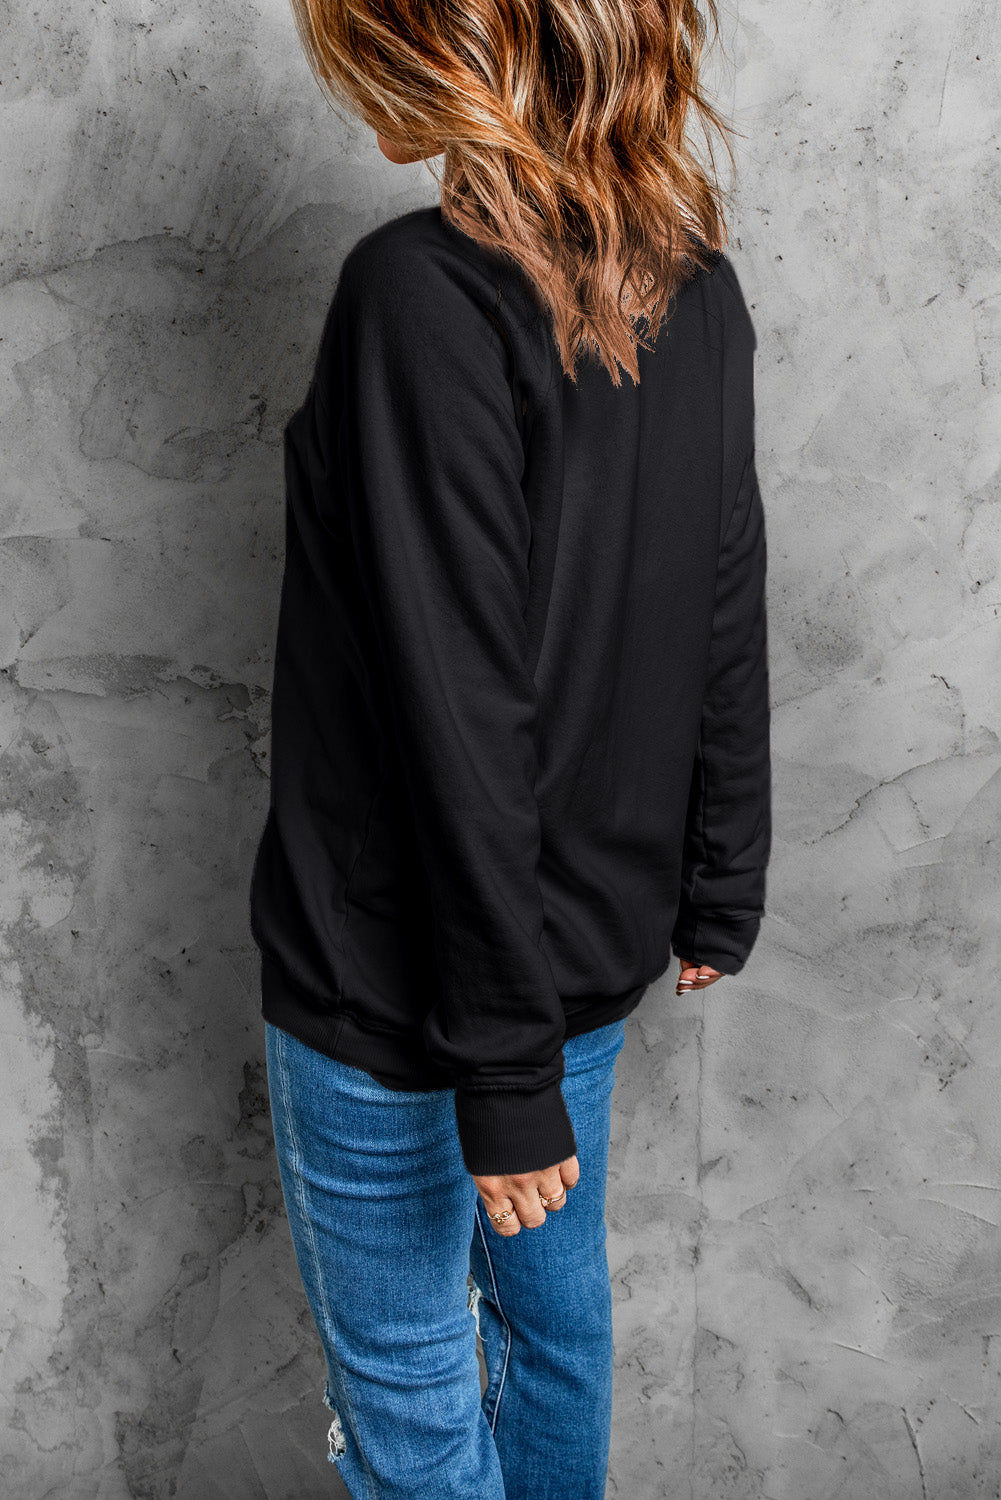 Black THANKFUL Heart Print Long Sleeve Sweatshirt Graphic Sweatshirts JT's Designer Fashion